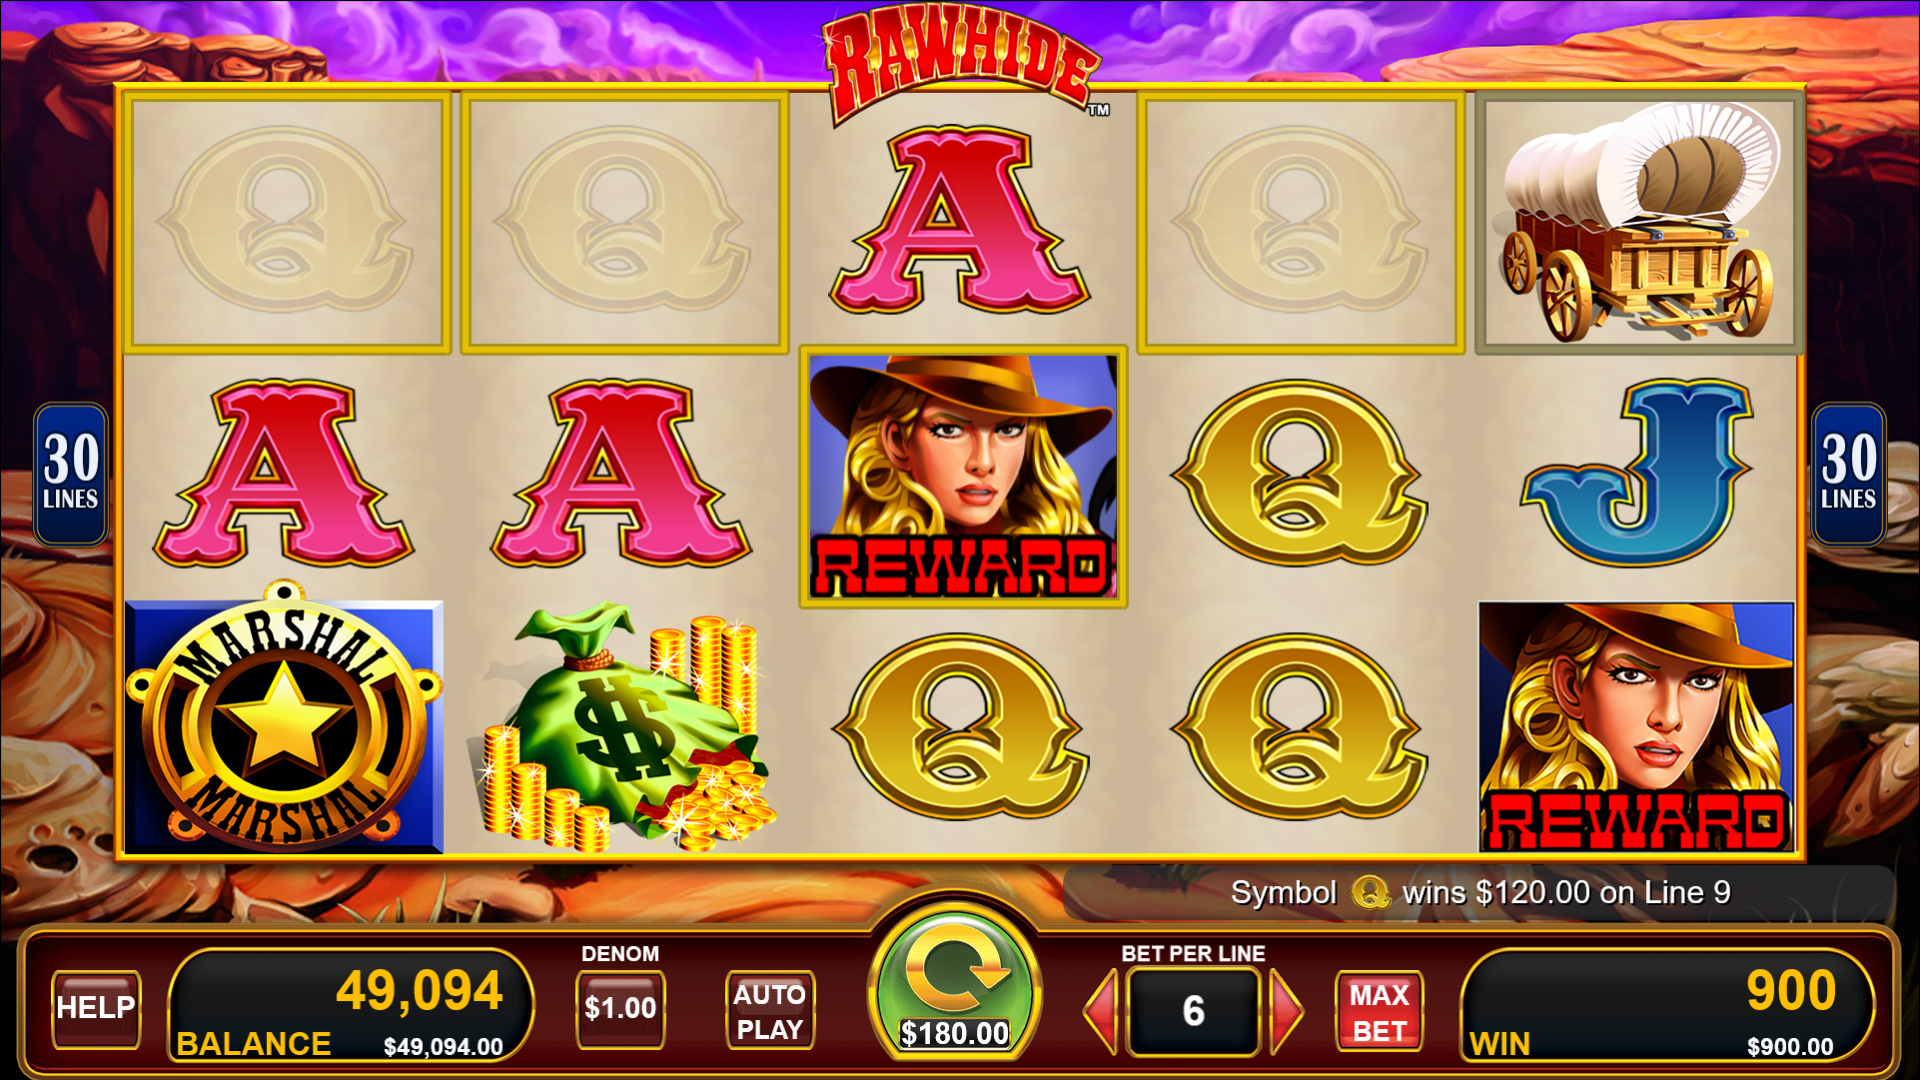 Rawhide Slot Machine Free/Real Money ᐈ (18+)